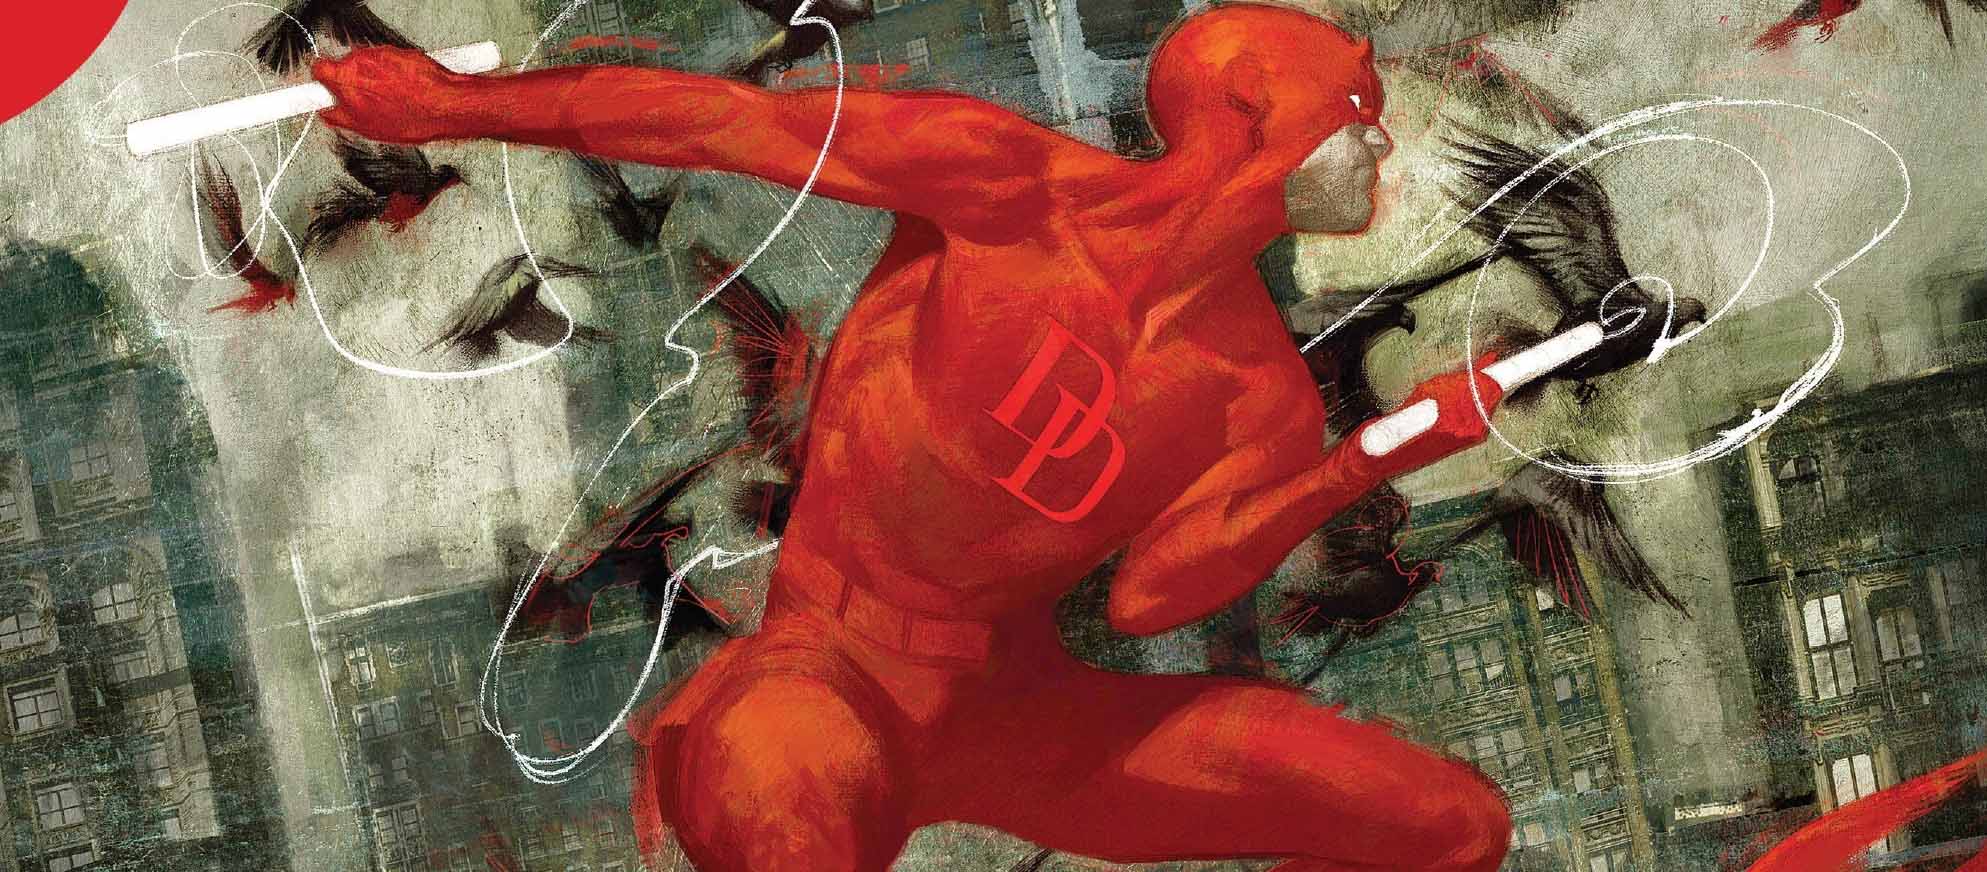 Daredevil #2 (Marvel Comics Snapshot Review) | Comicdom1987 x 872